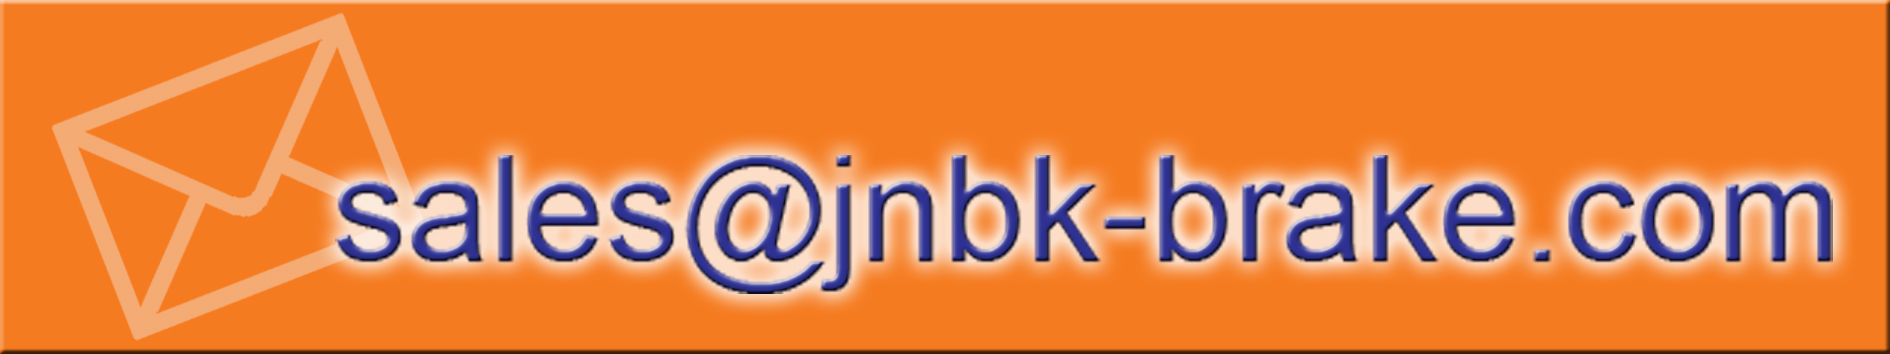 JNBK enquiry